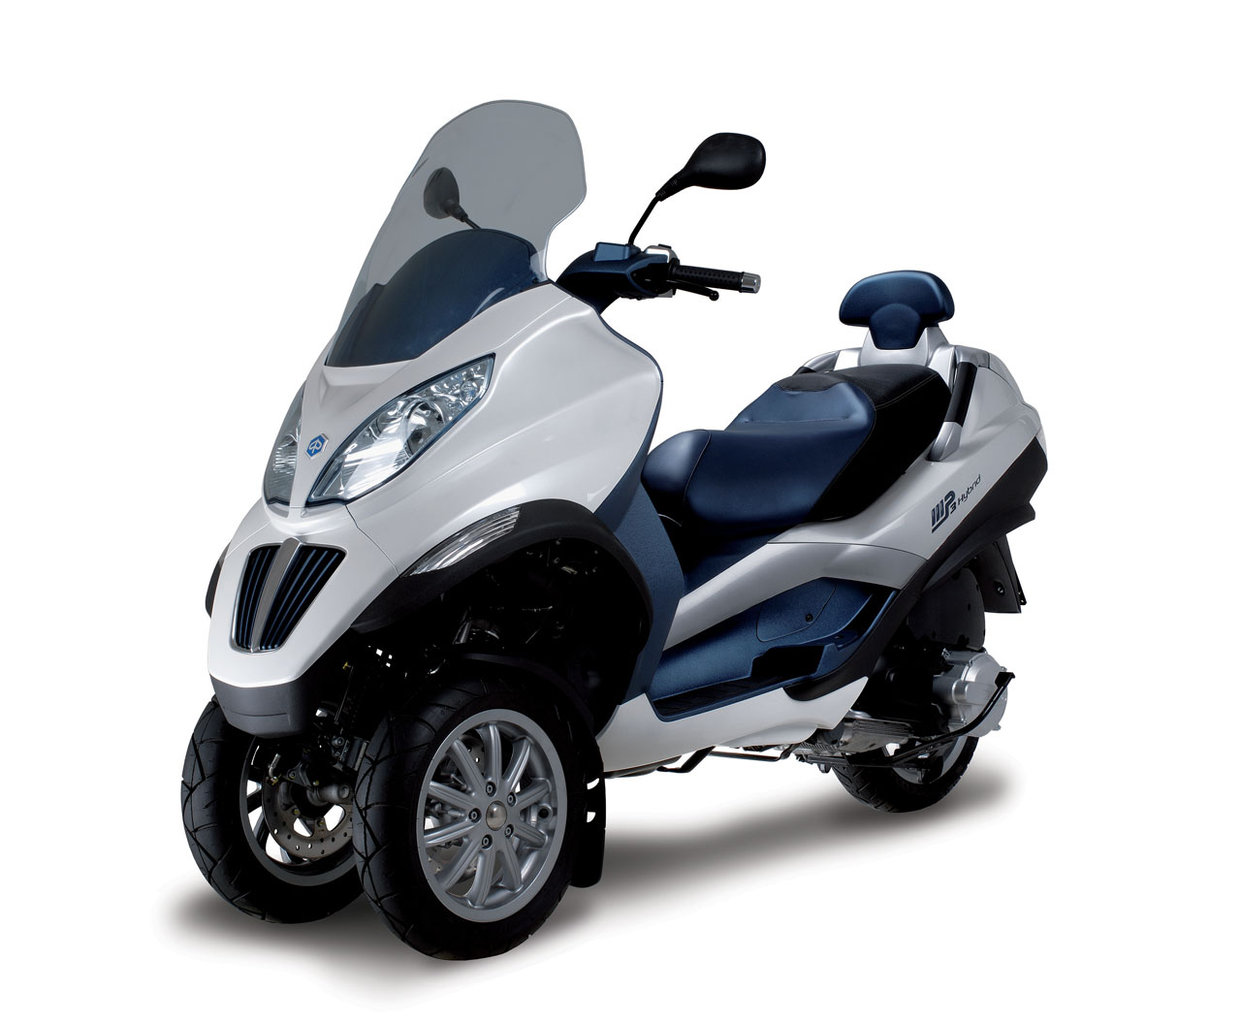 Listino Piaggio MP3 300 Hybrid Scooter 150-300 - image 15089_piaggio-mp3300-hybrid on https://moto.motori.net